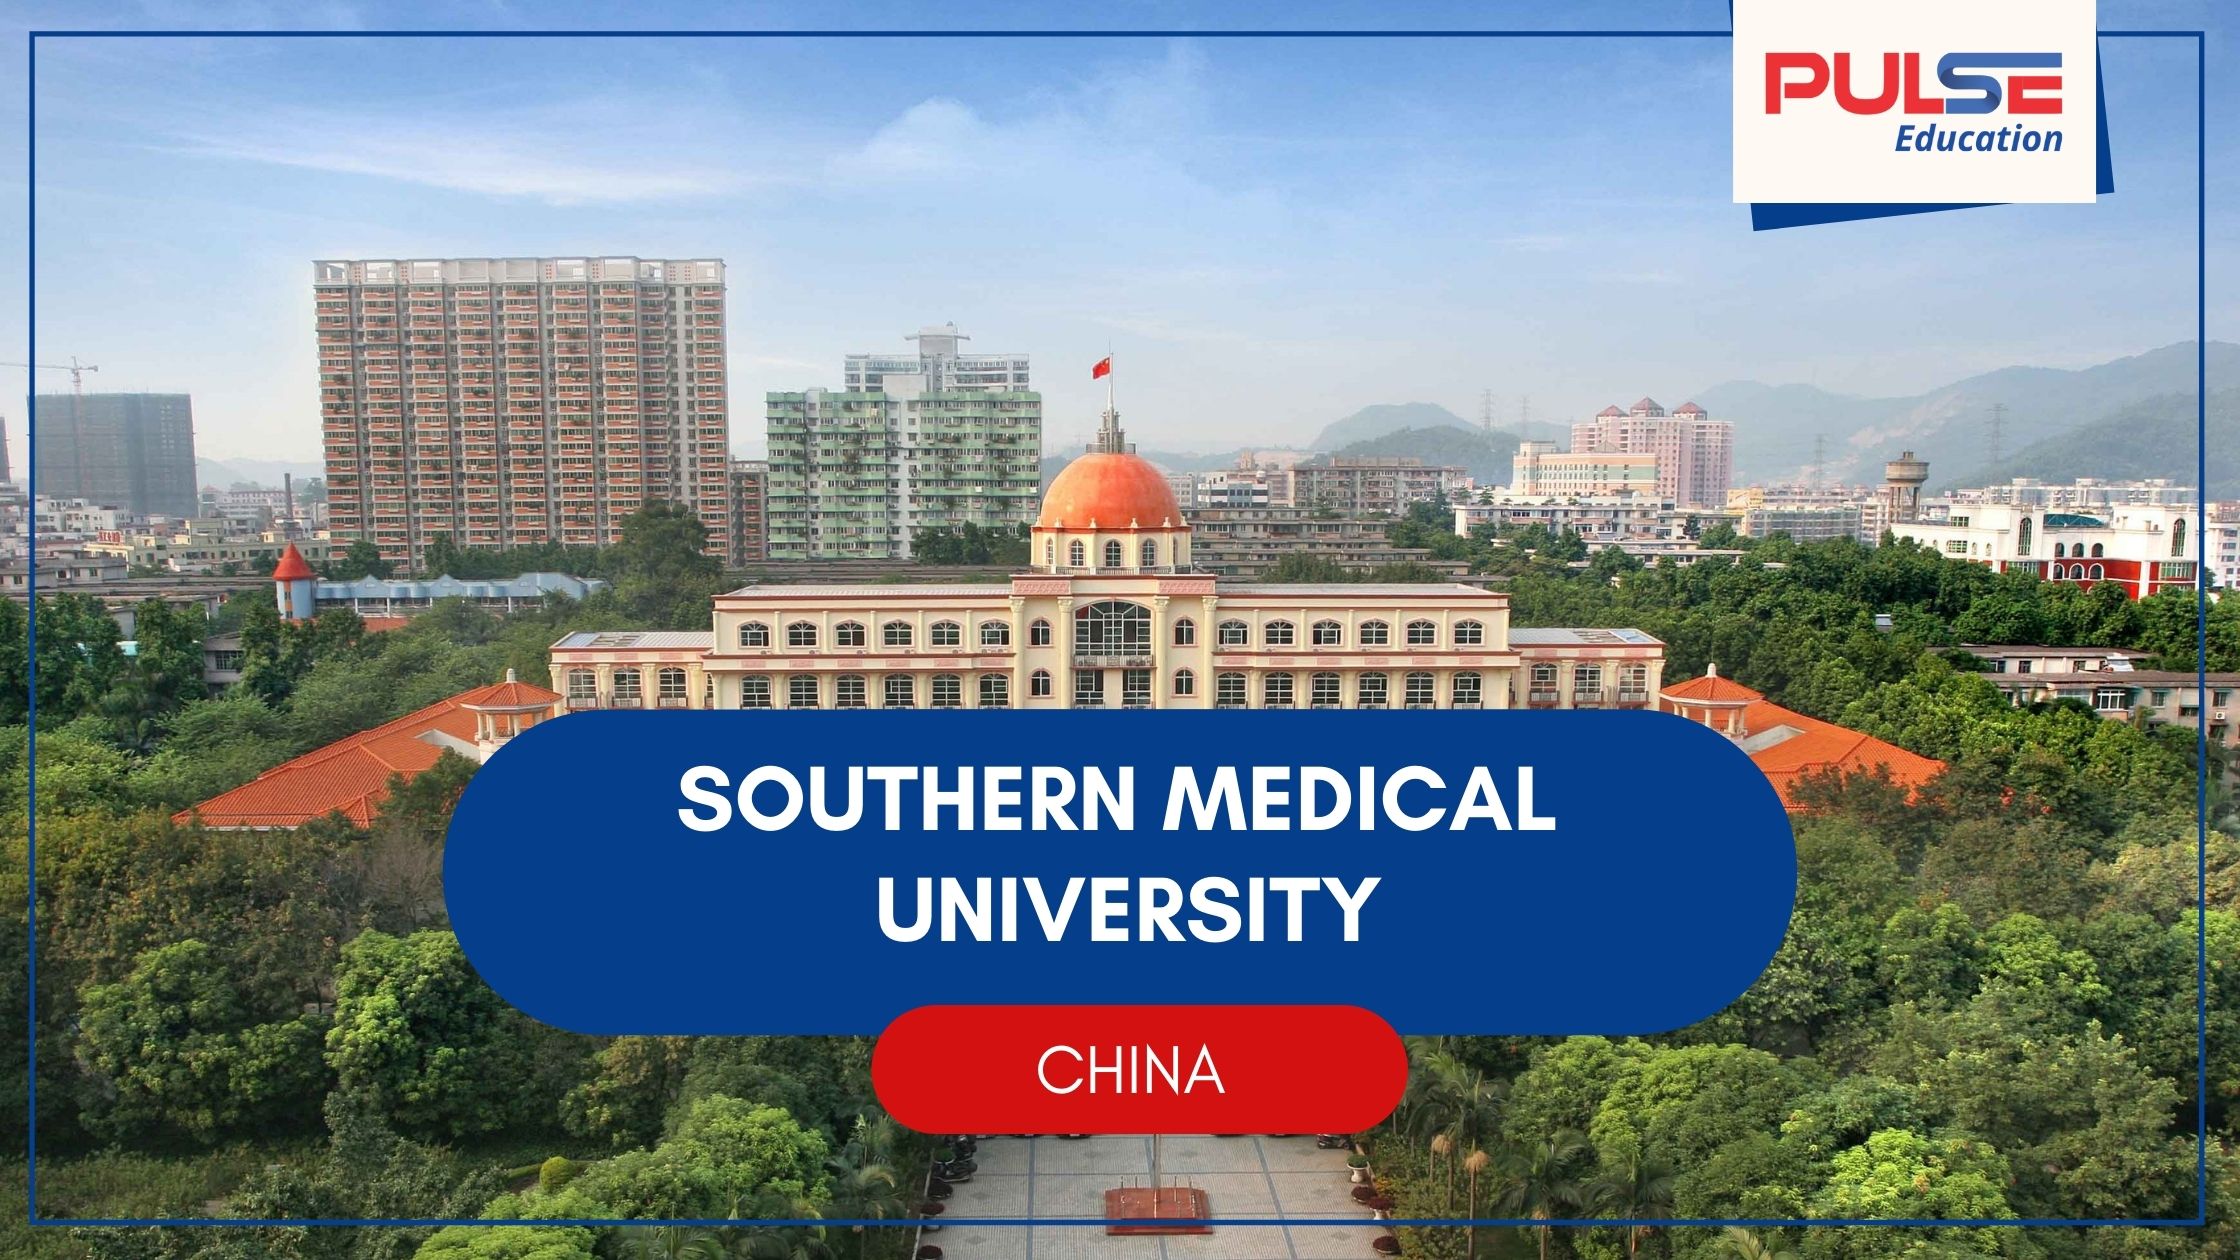 Southern Medical University